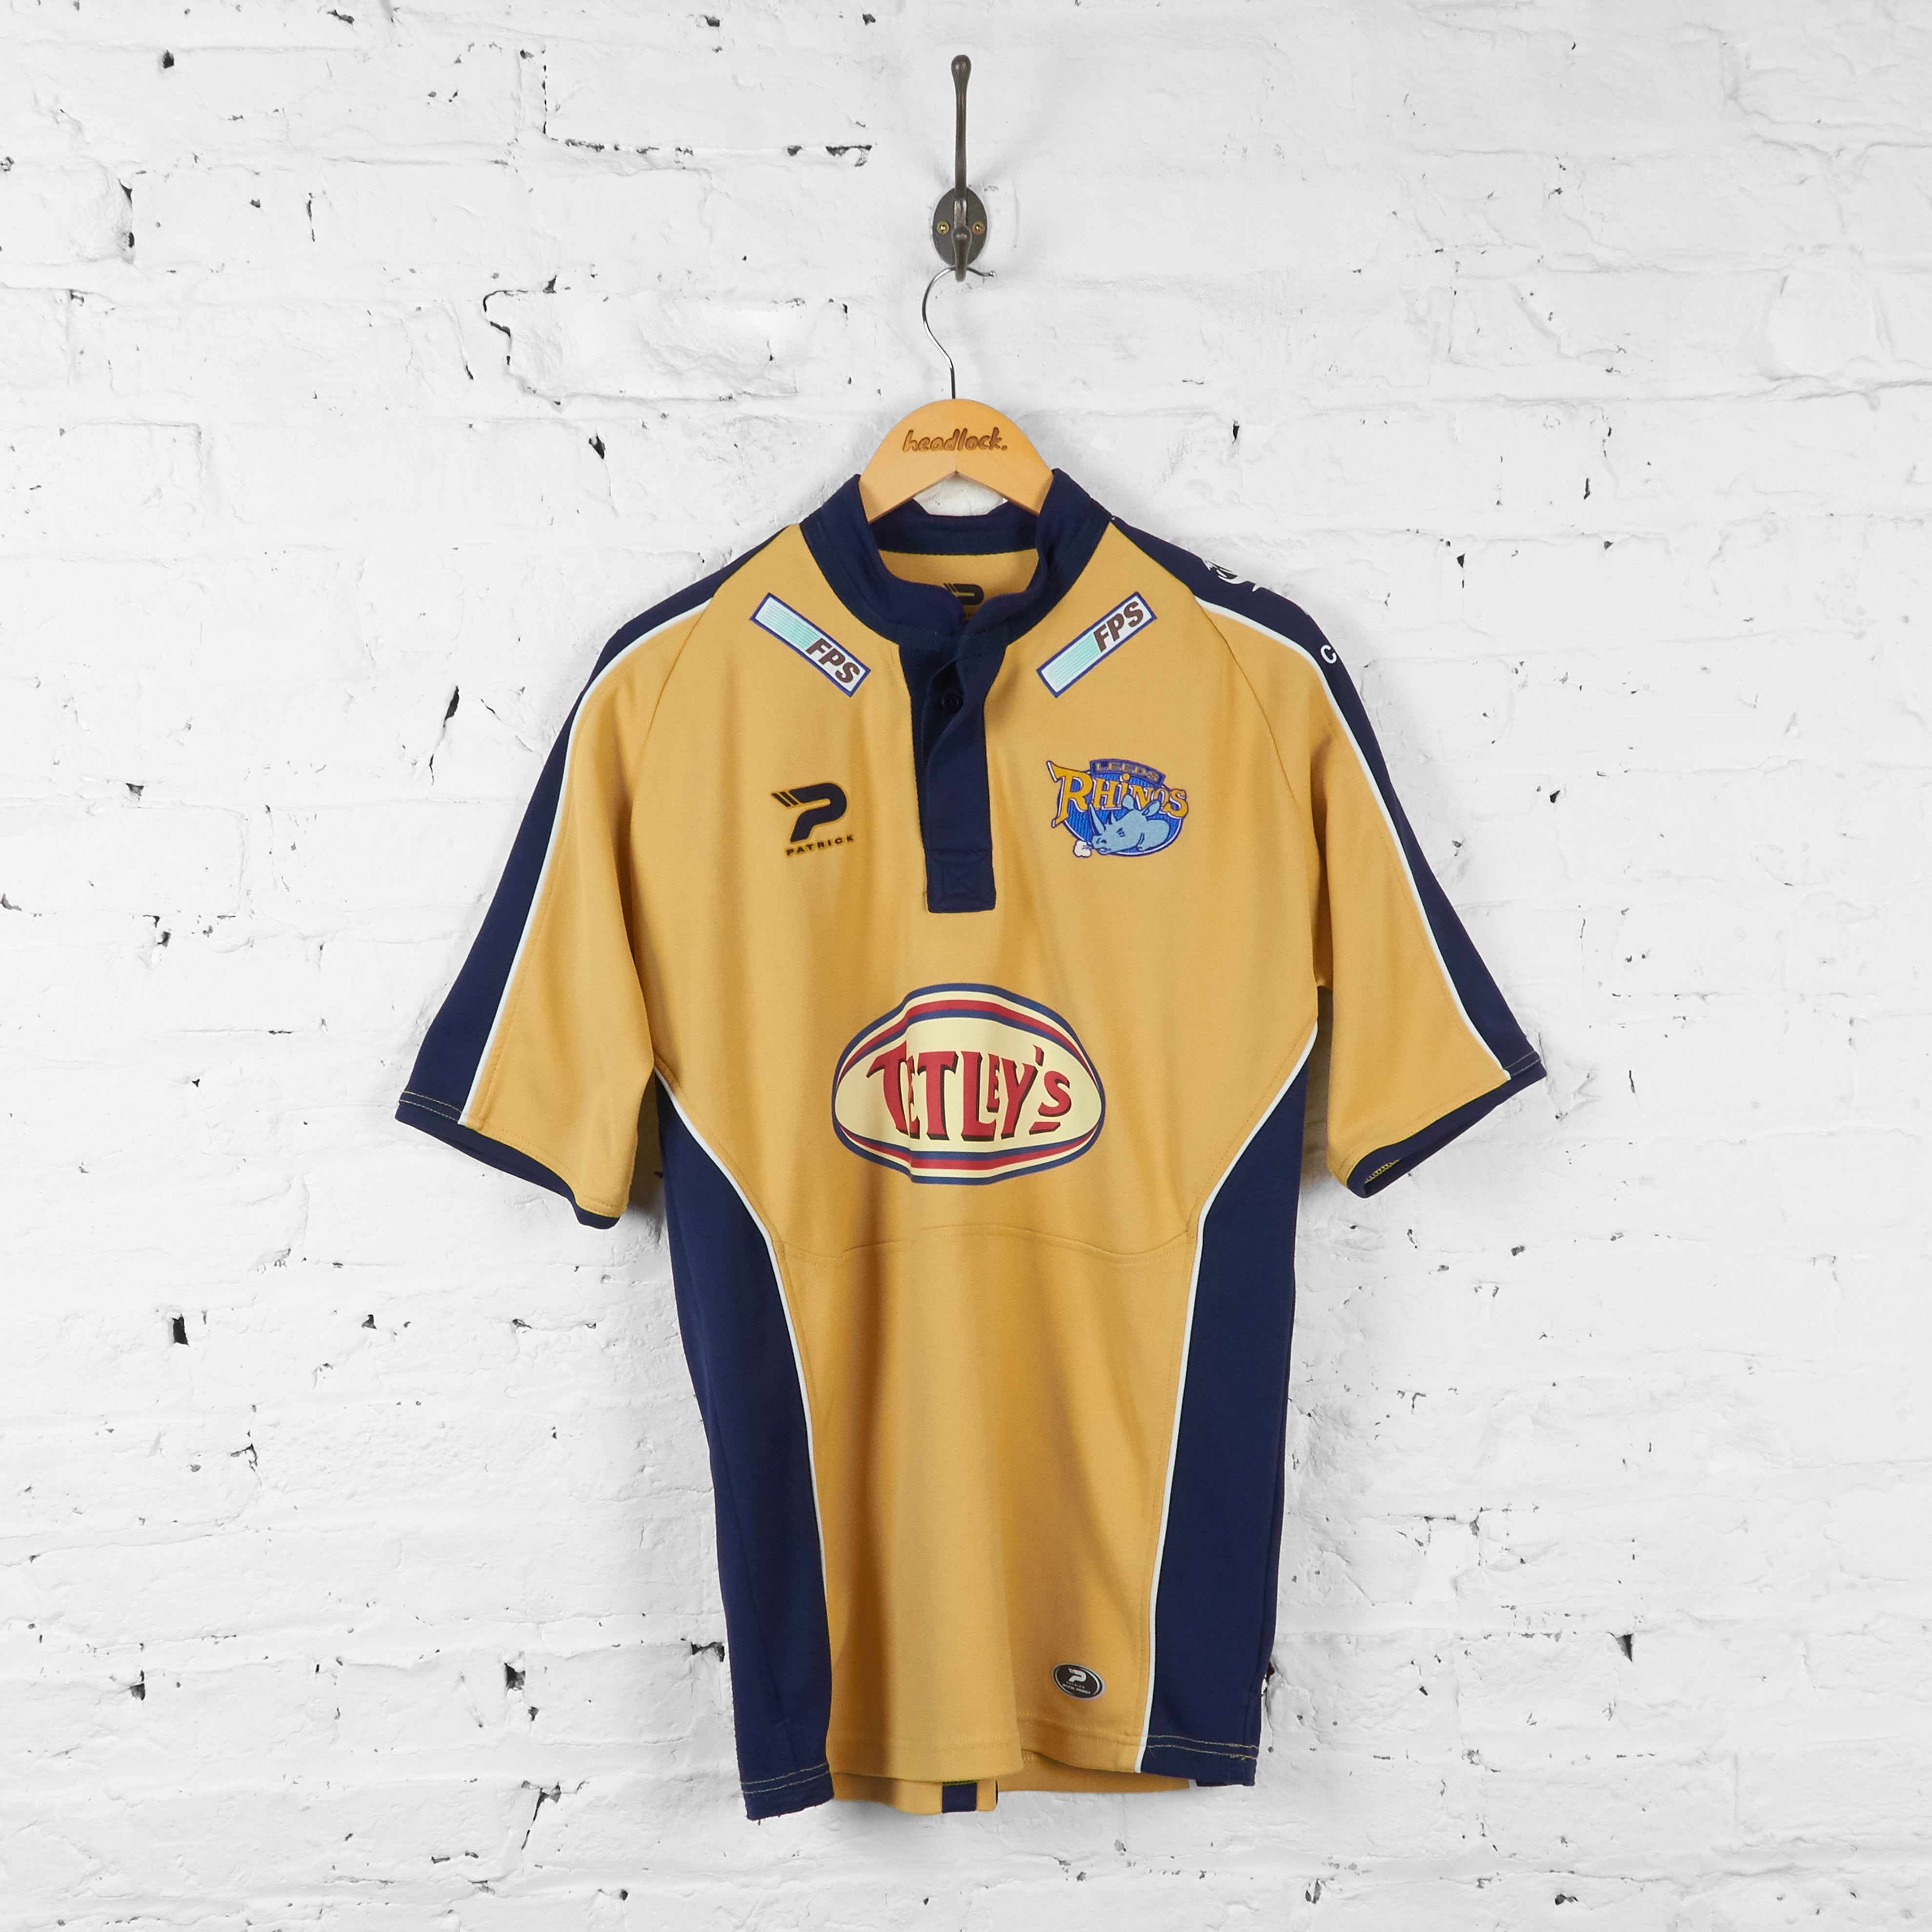 Men's Leeds Rhinos Rugby Shirt in Cobalt/gold